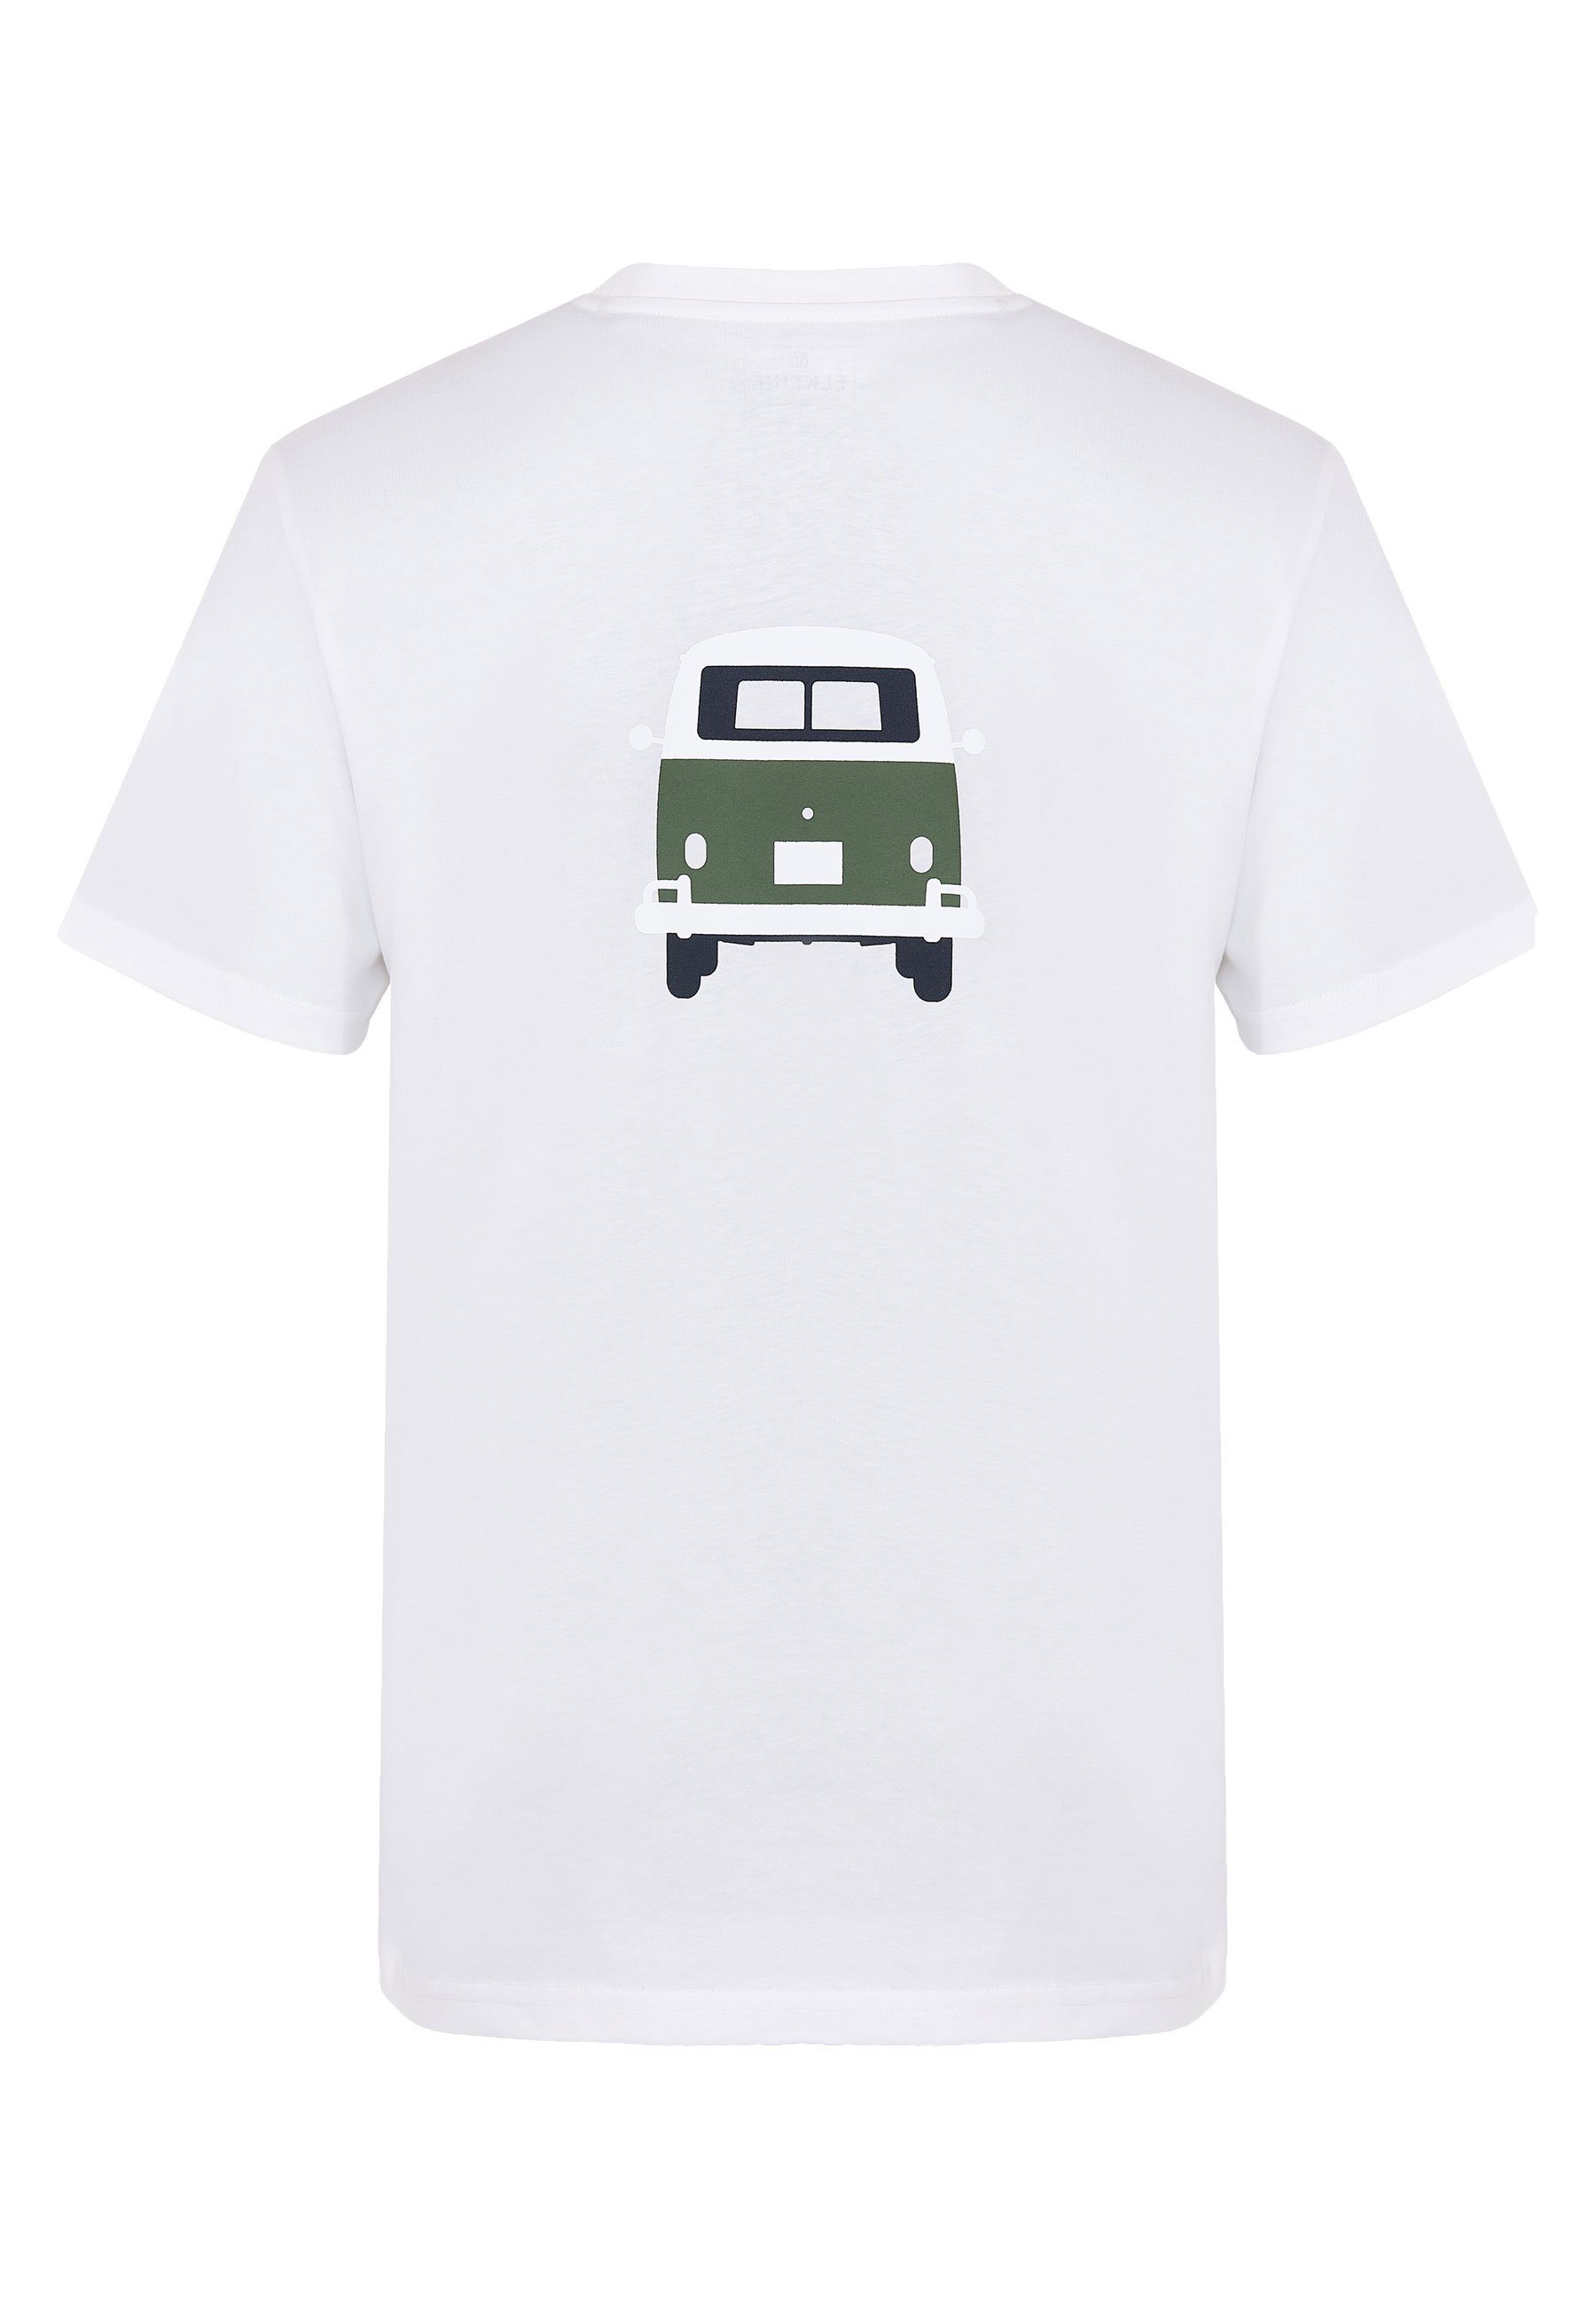 Elkline T-Shirt Brust lizenzierter Rücken Bulli White VW Print Methusalem